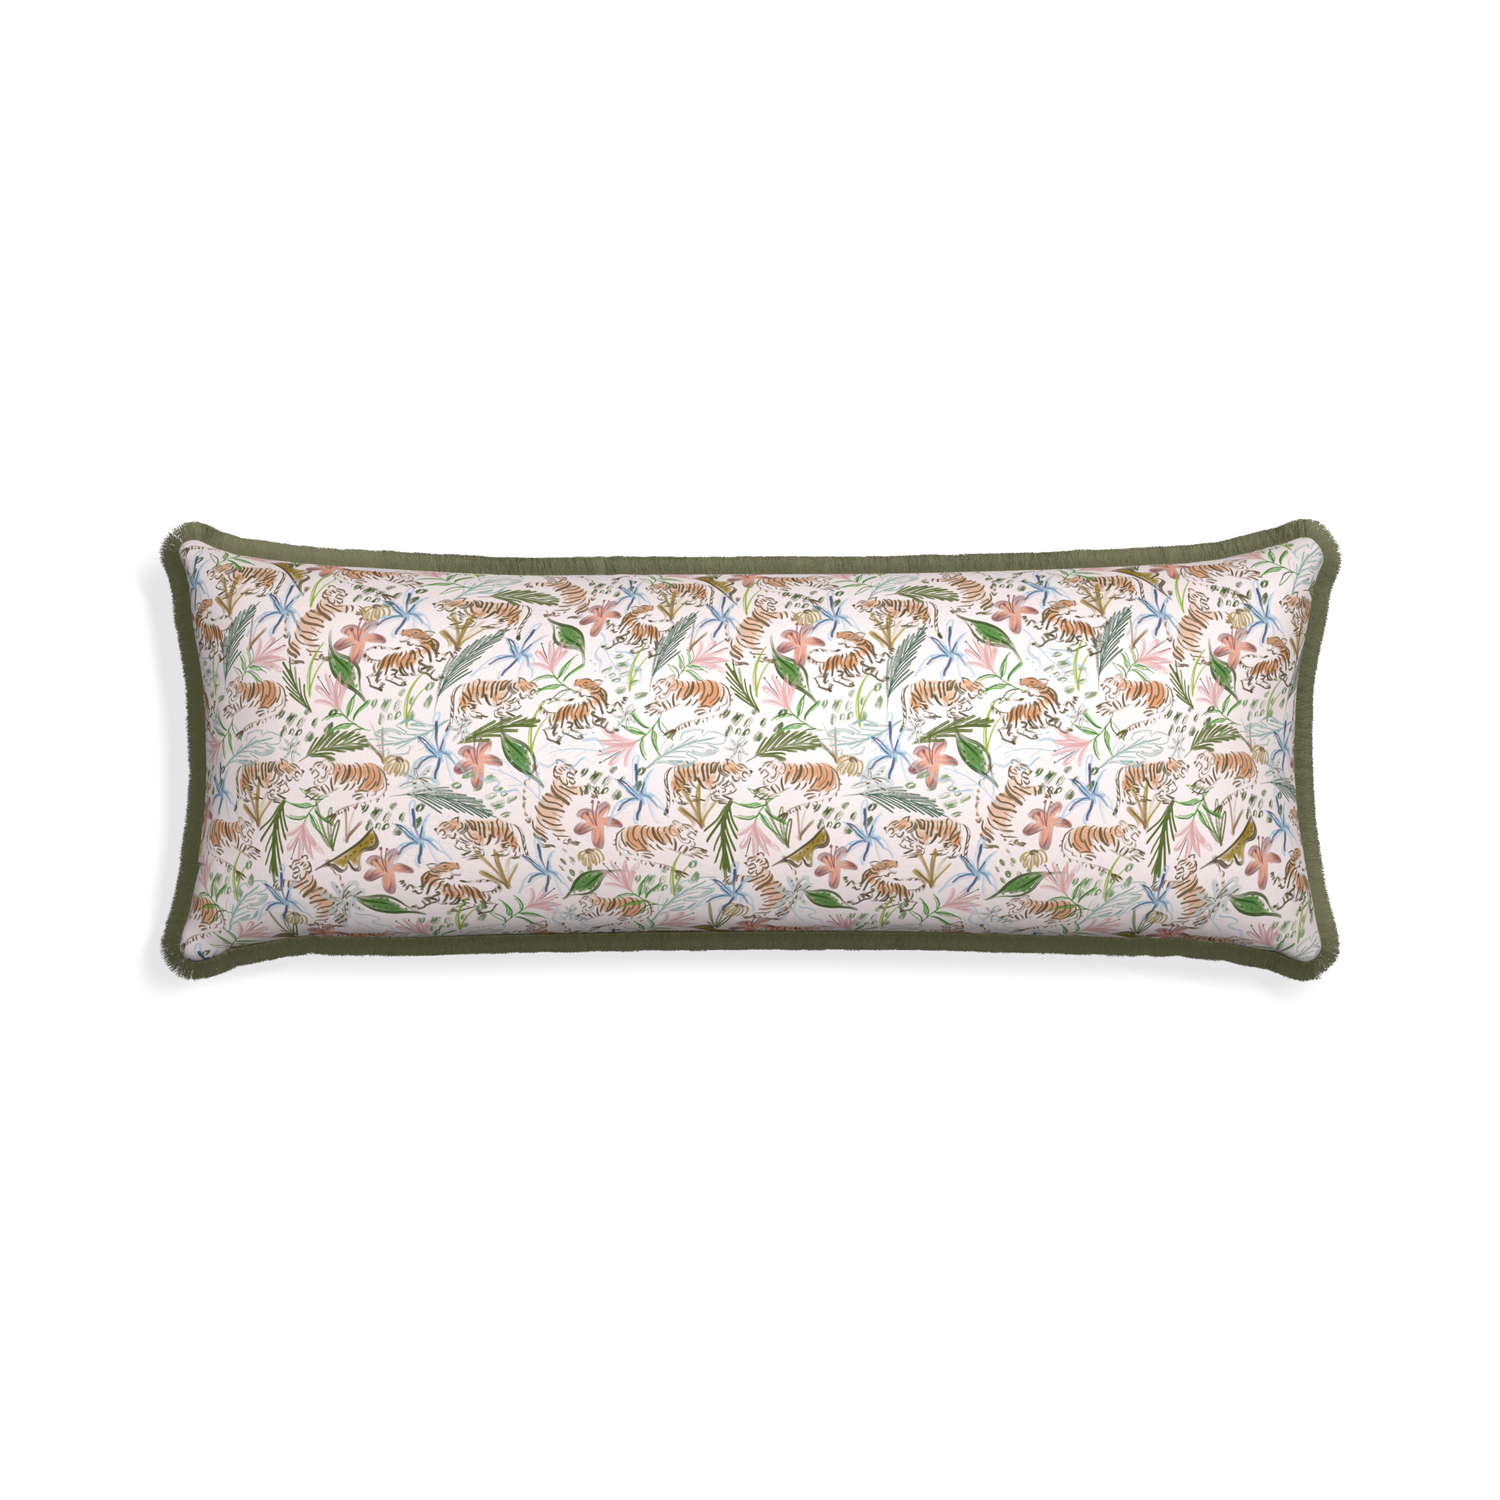 Xl-lumbar frida pink custom pillow with sage fringe on white background